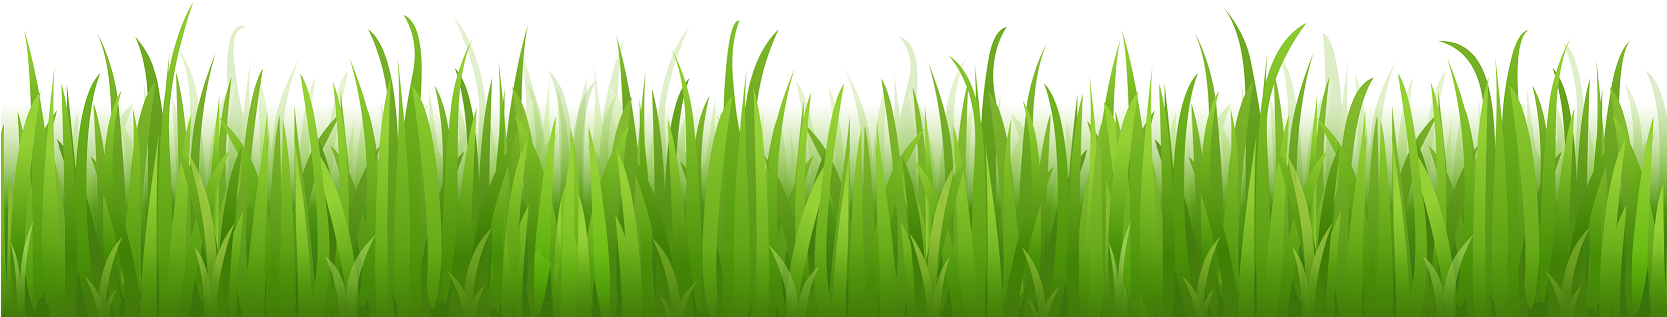 Green Grass Png Image Background Grass Clipart